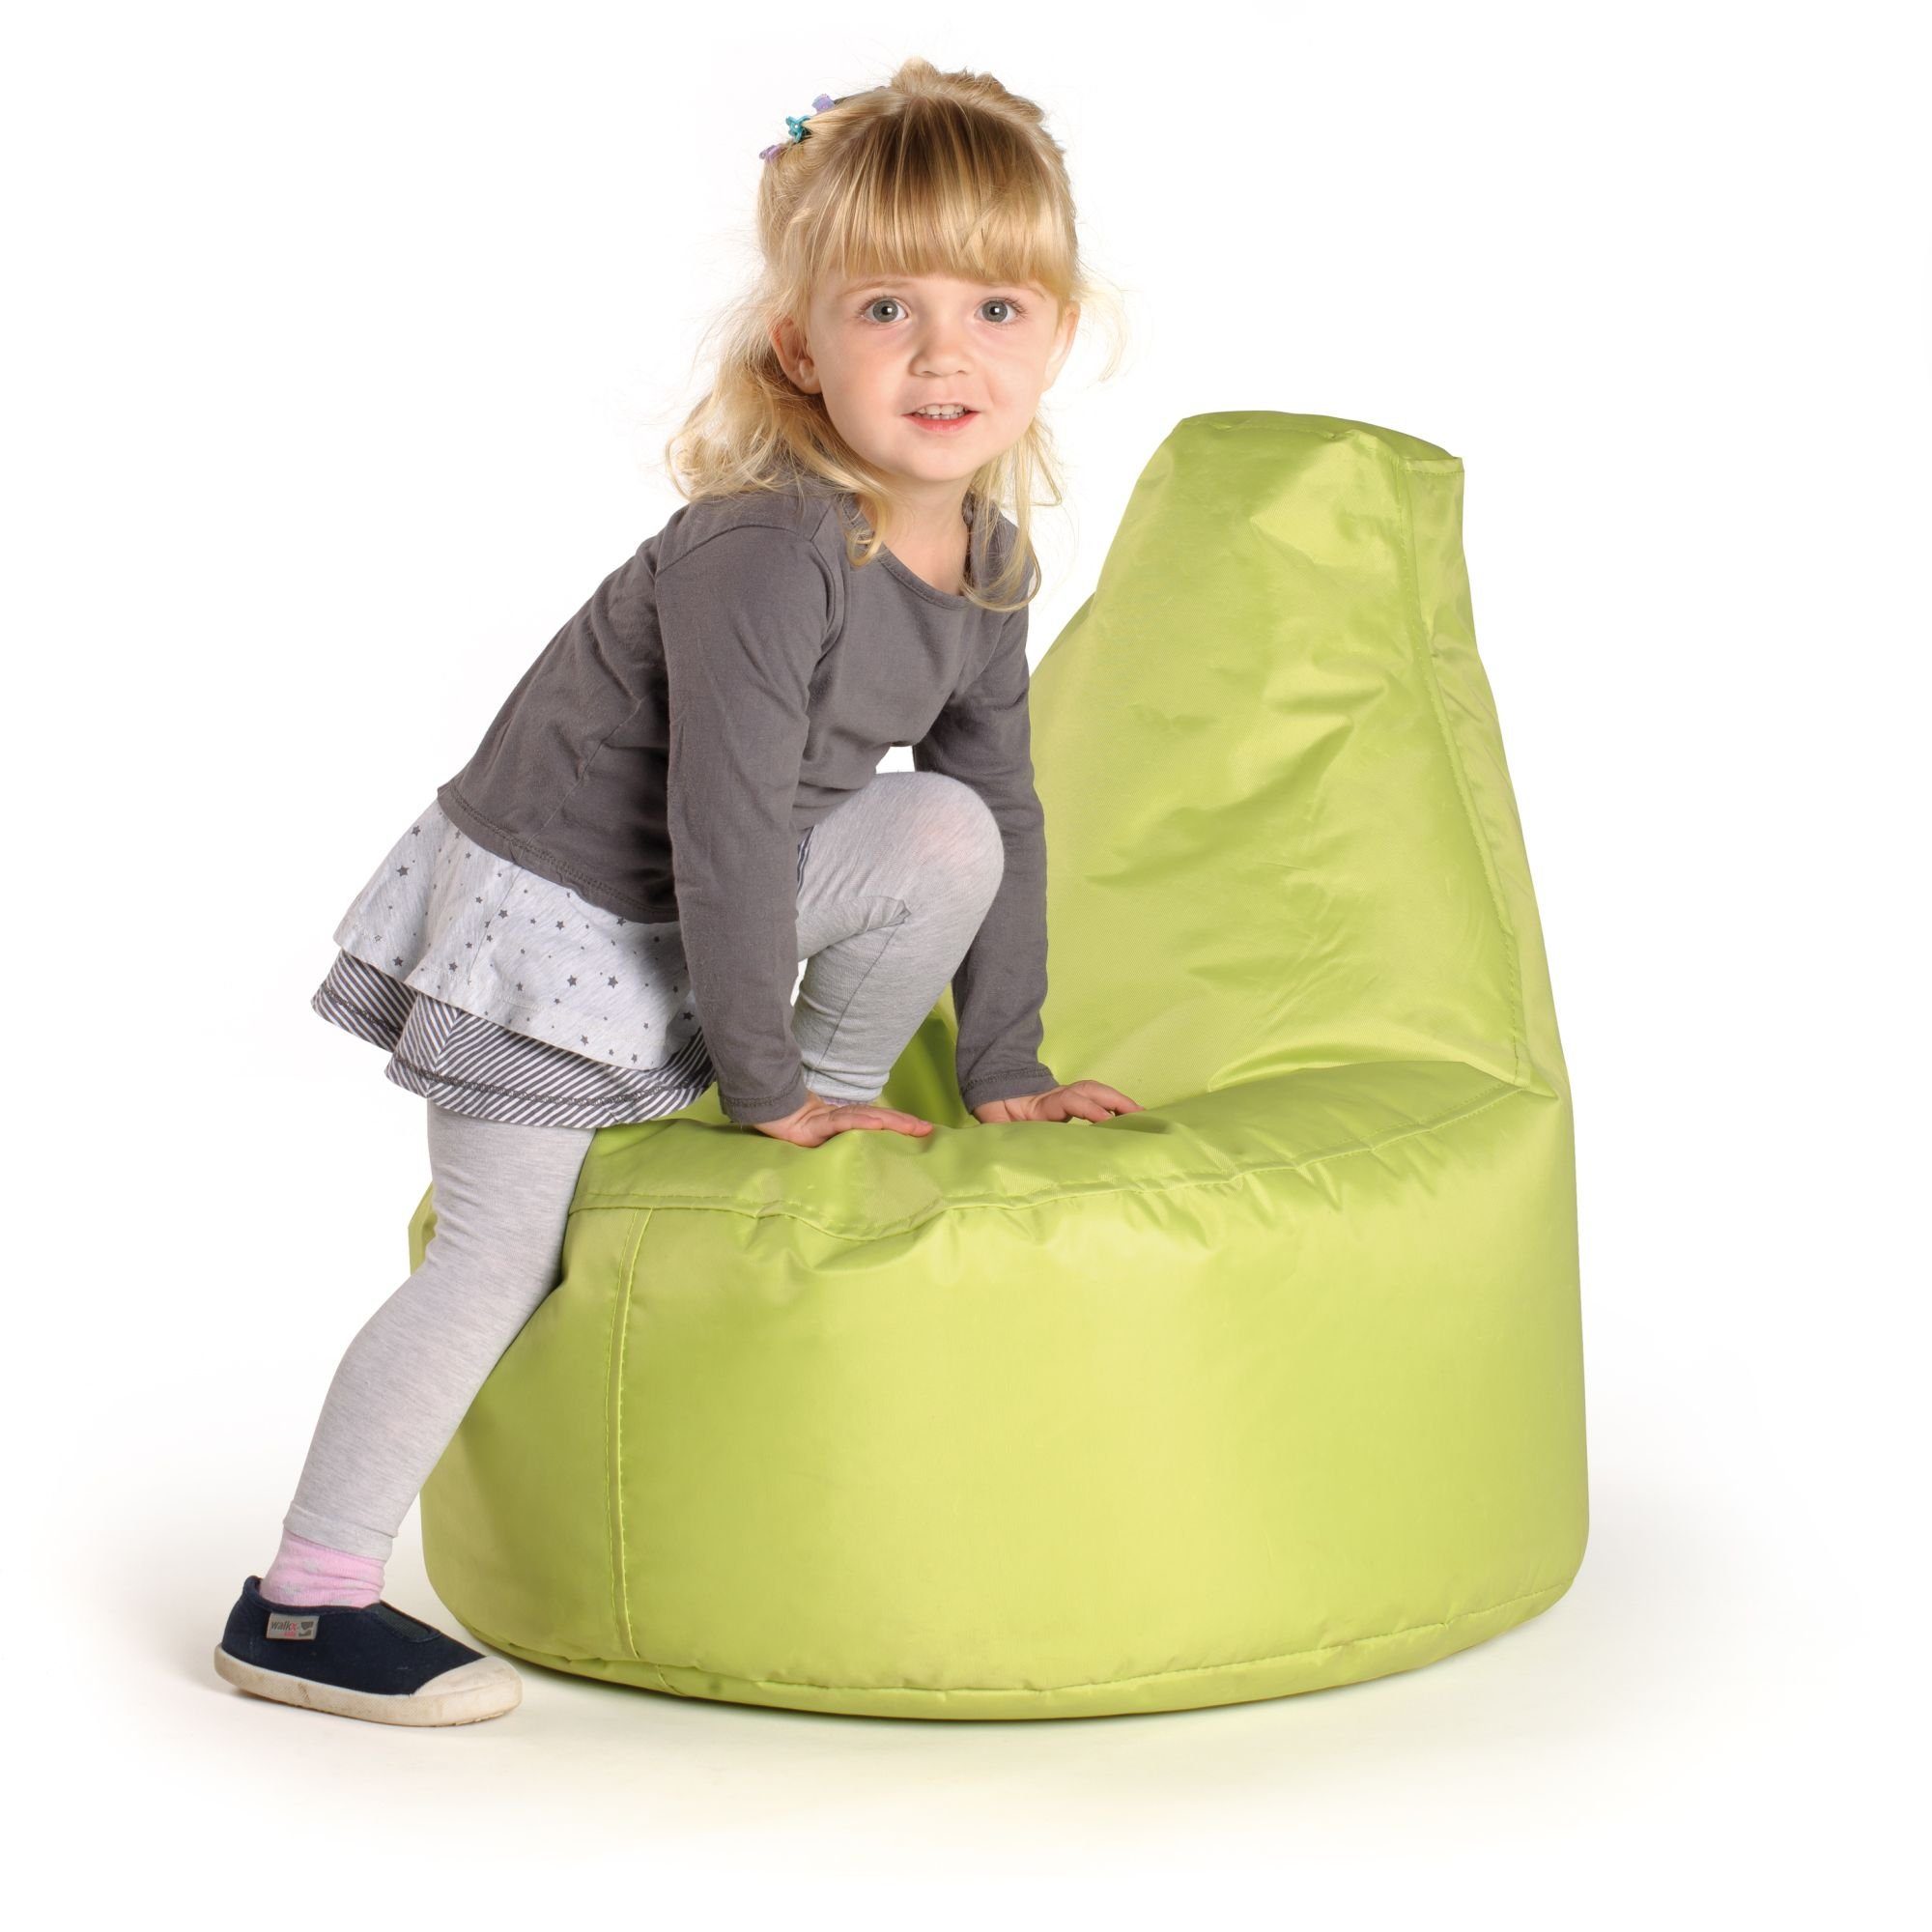 Outdoor, aus St), robuster Sitzsack wetterfester, grün, Erzi® Polyester Sitzsack (1